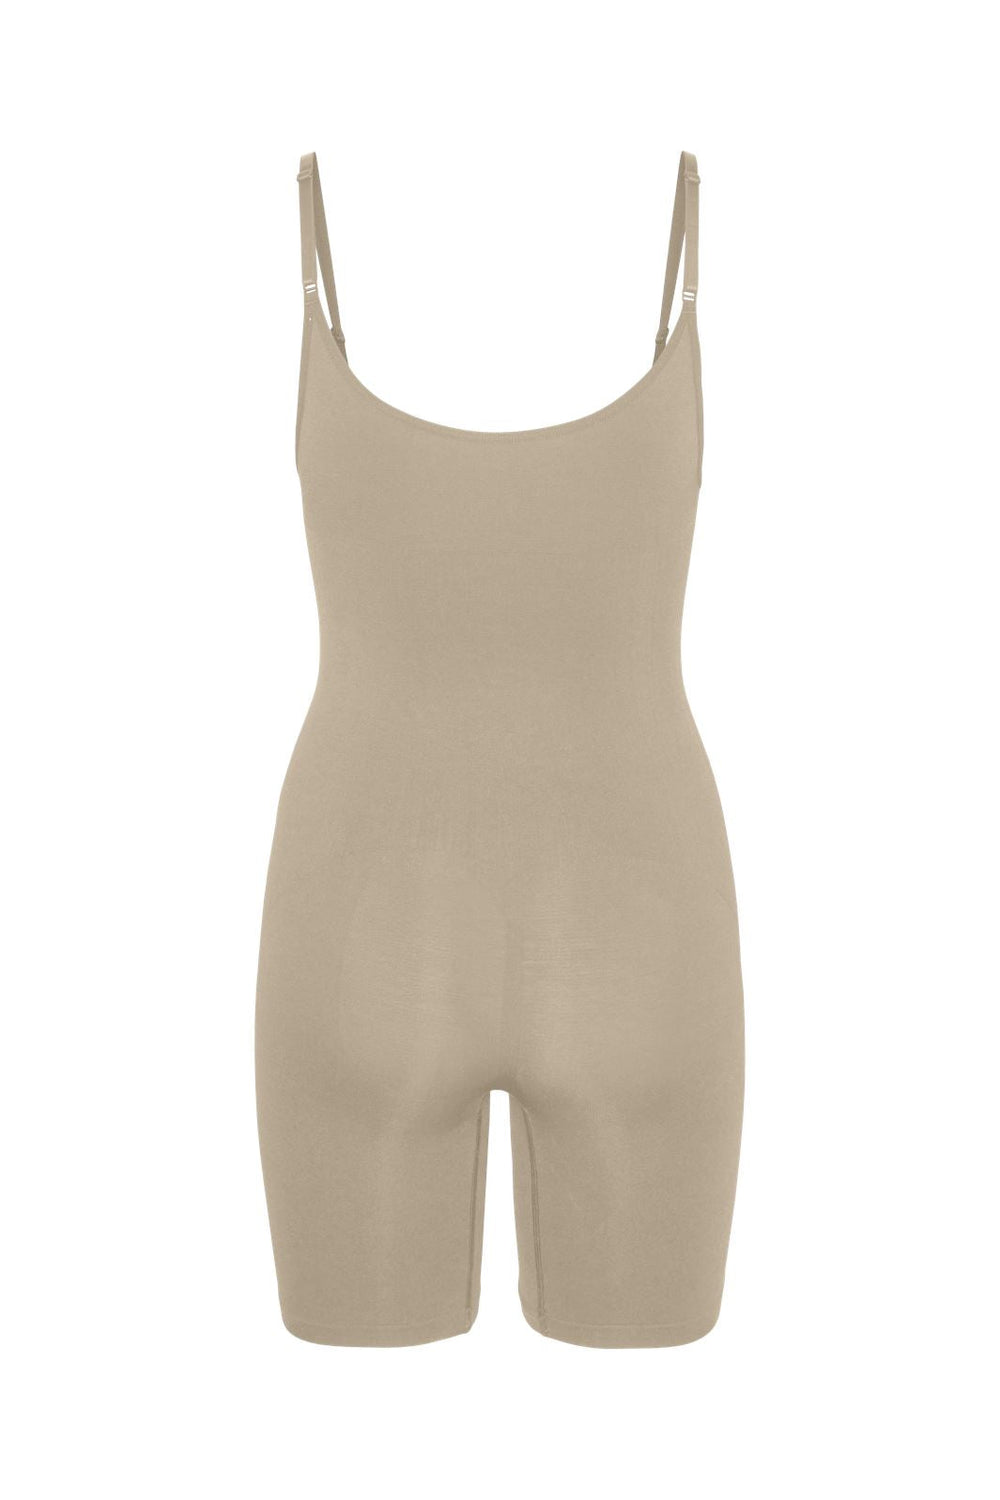 Vero Moda Accessories - Vmsilla Shape Under Bust Bodysuit - 4605613 White Pepper